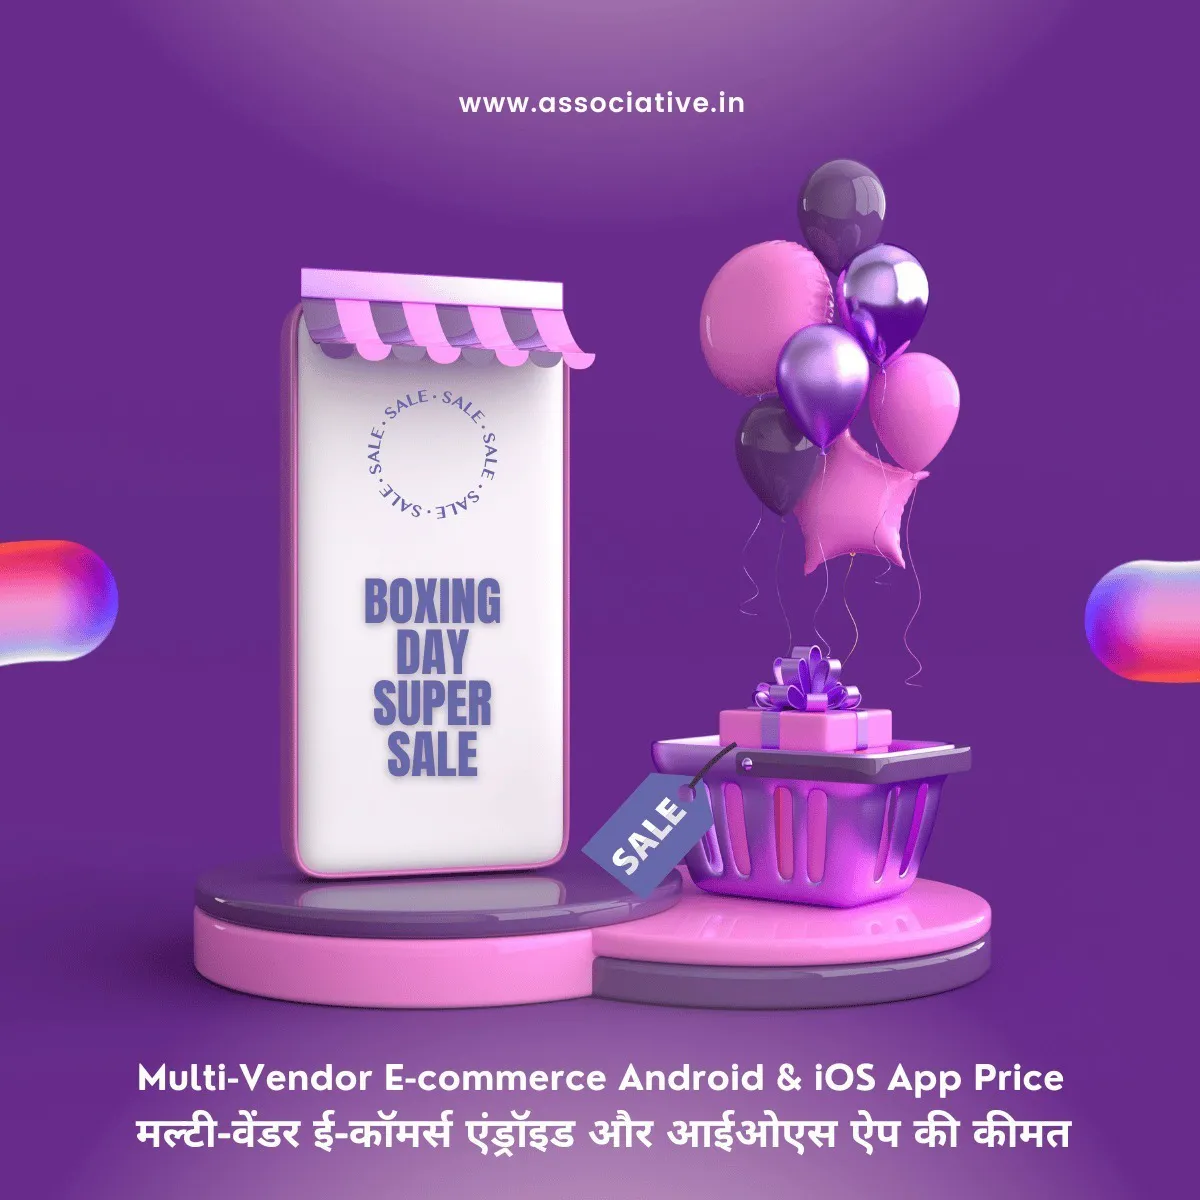 Multi-Vendor E-commerce Android & iOS App